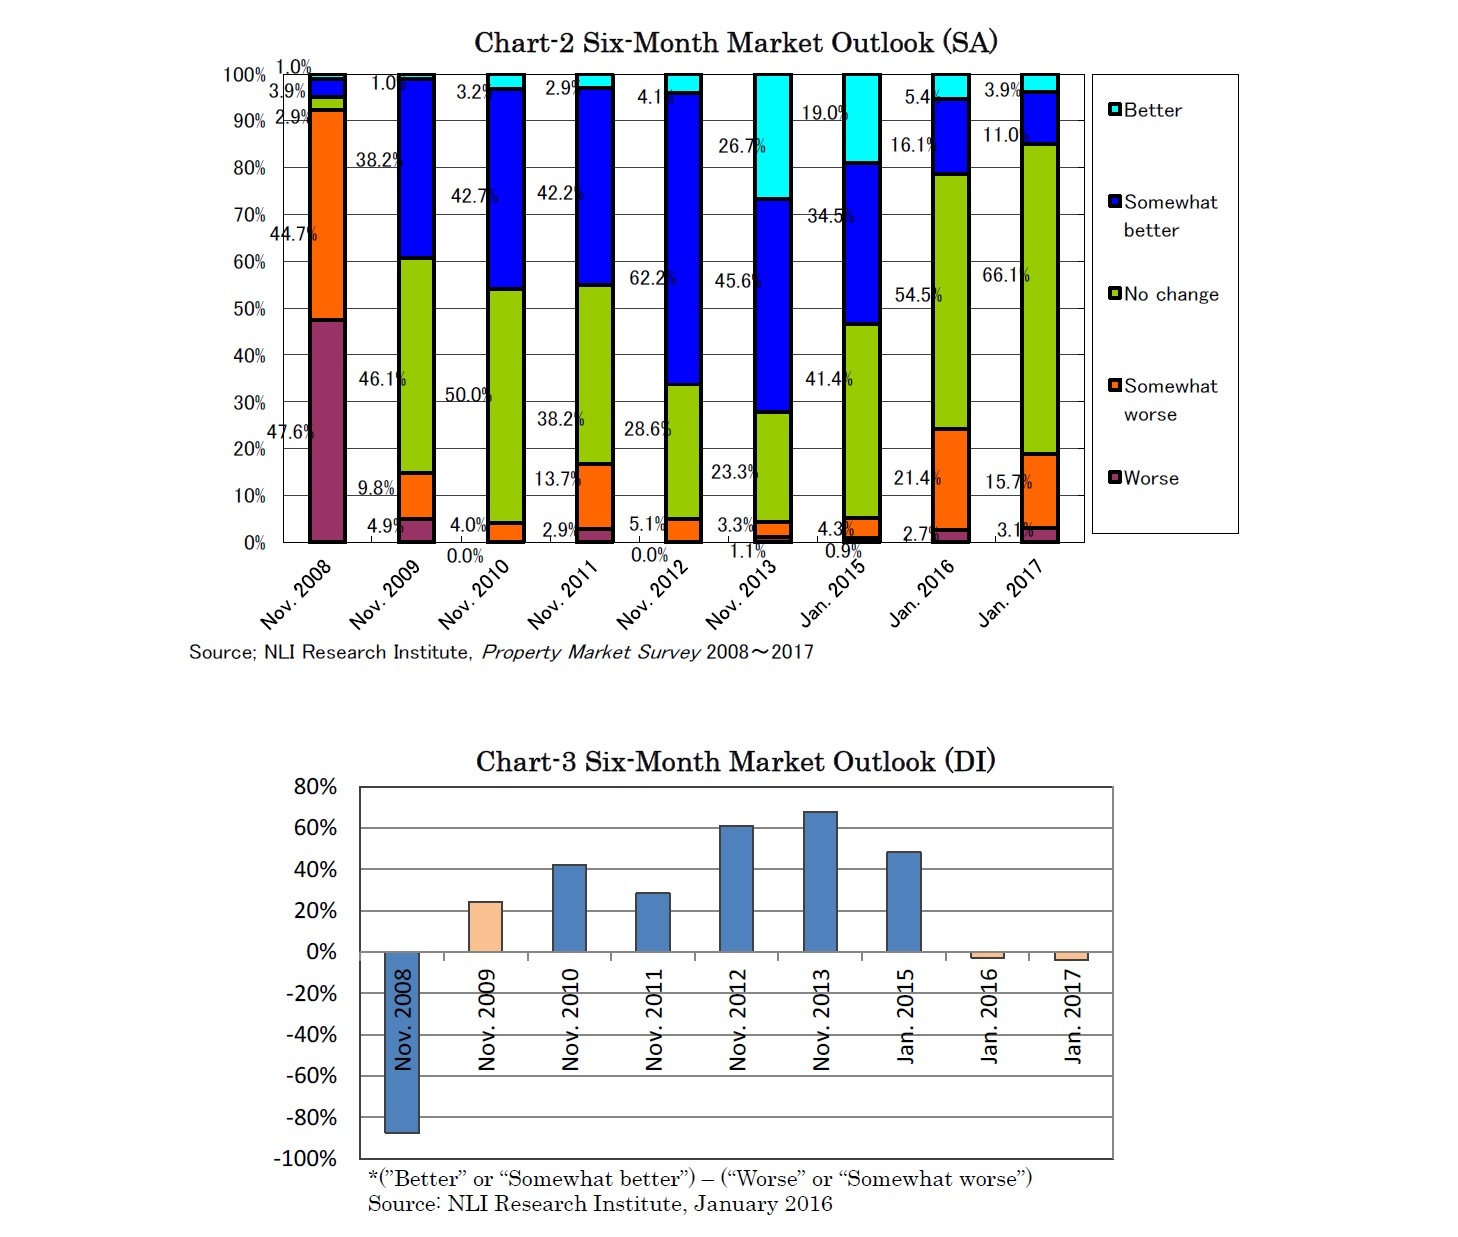 Chart-2 Six-Month Market Outlook (SA)/Chart-3 Six-Month Market Outlook (DI)